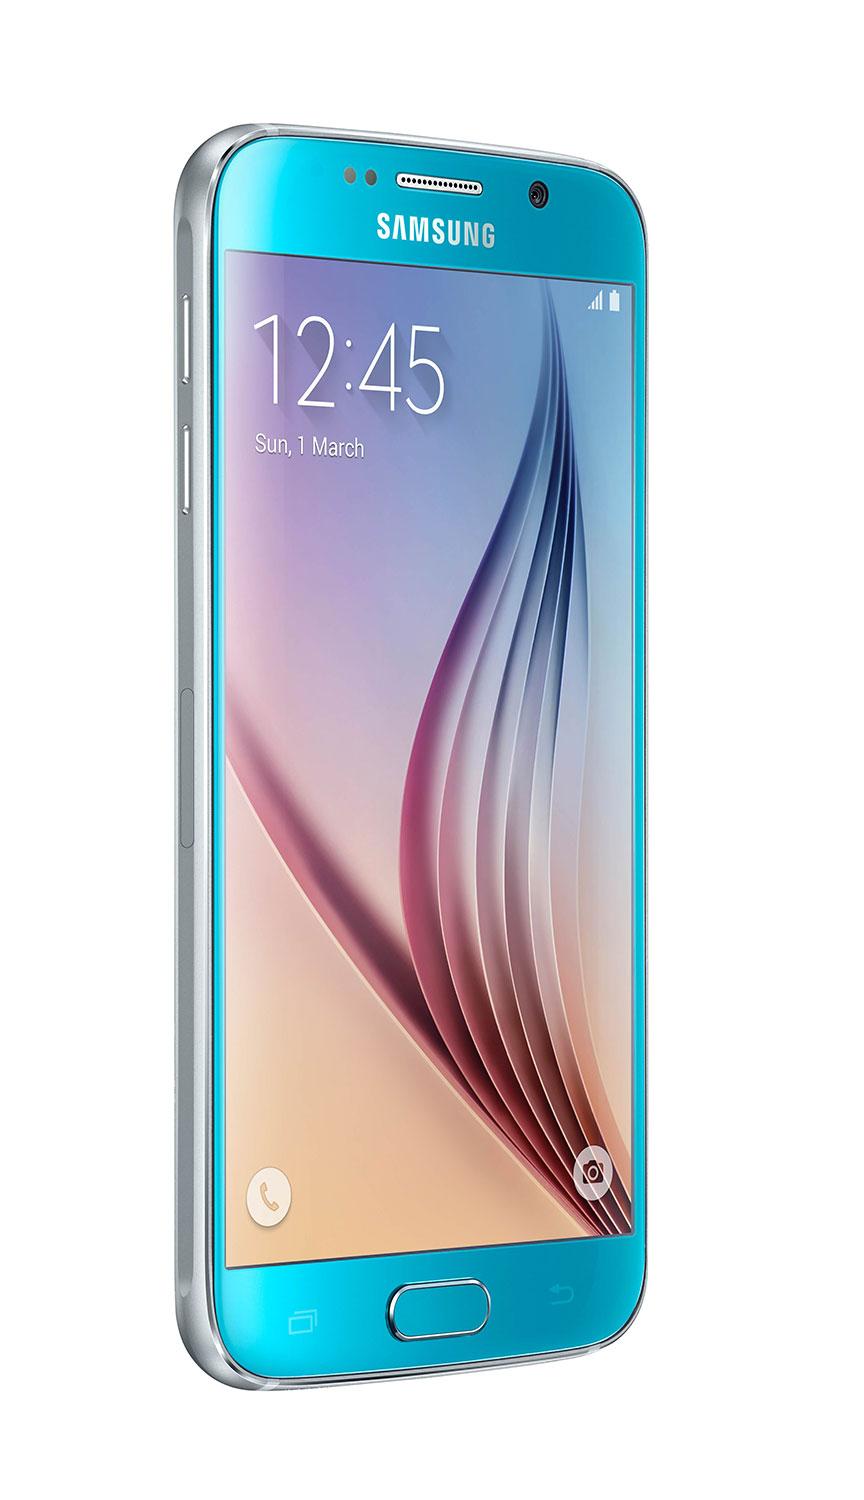 Samsung Galaxy S6 en color azul vista lateral